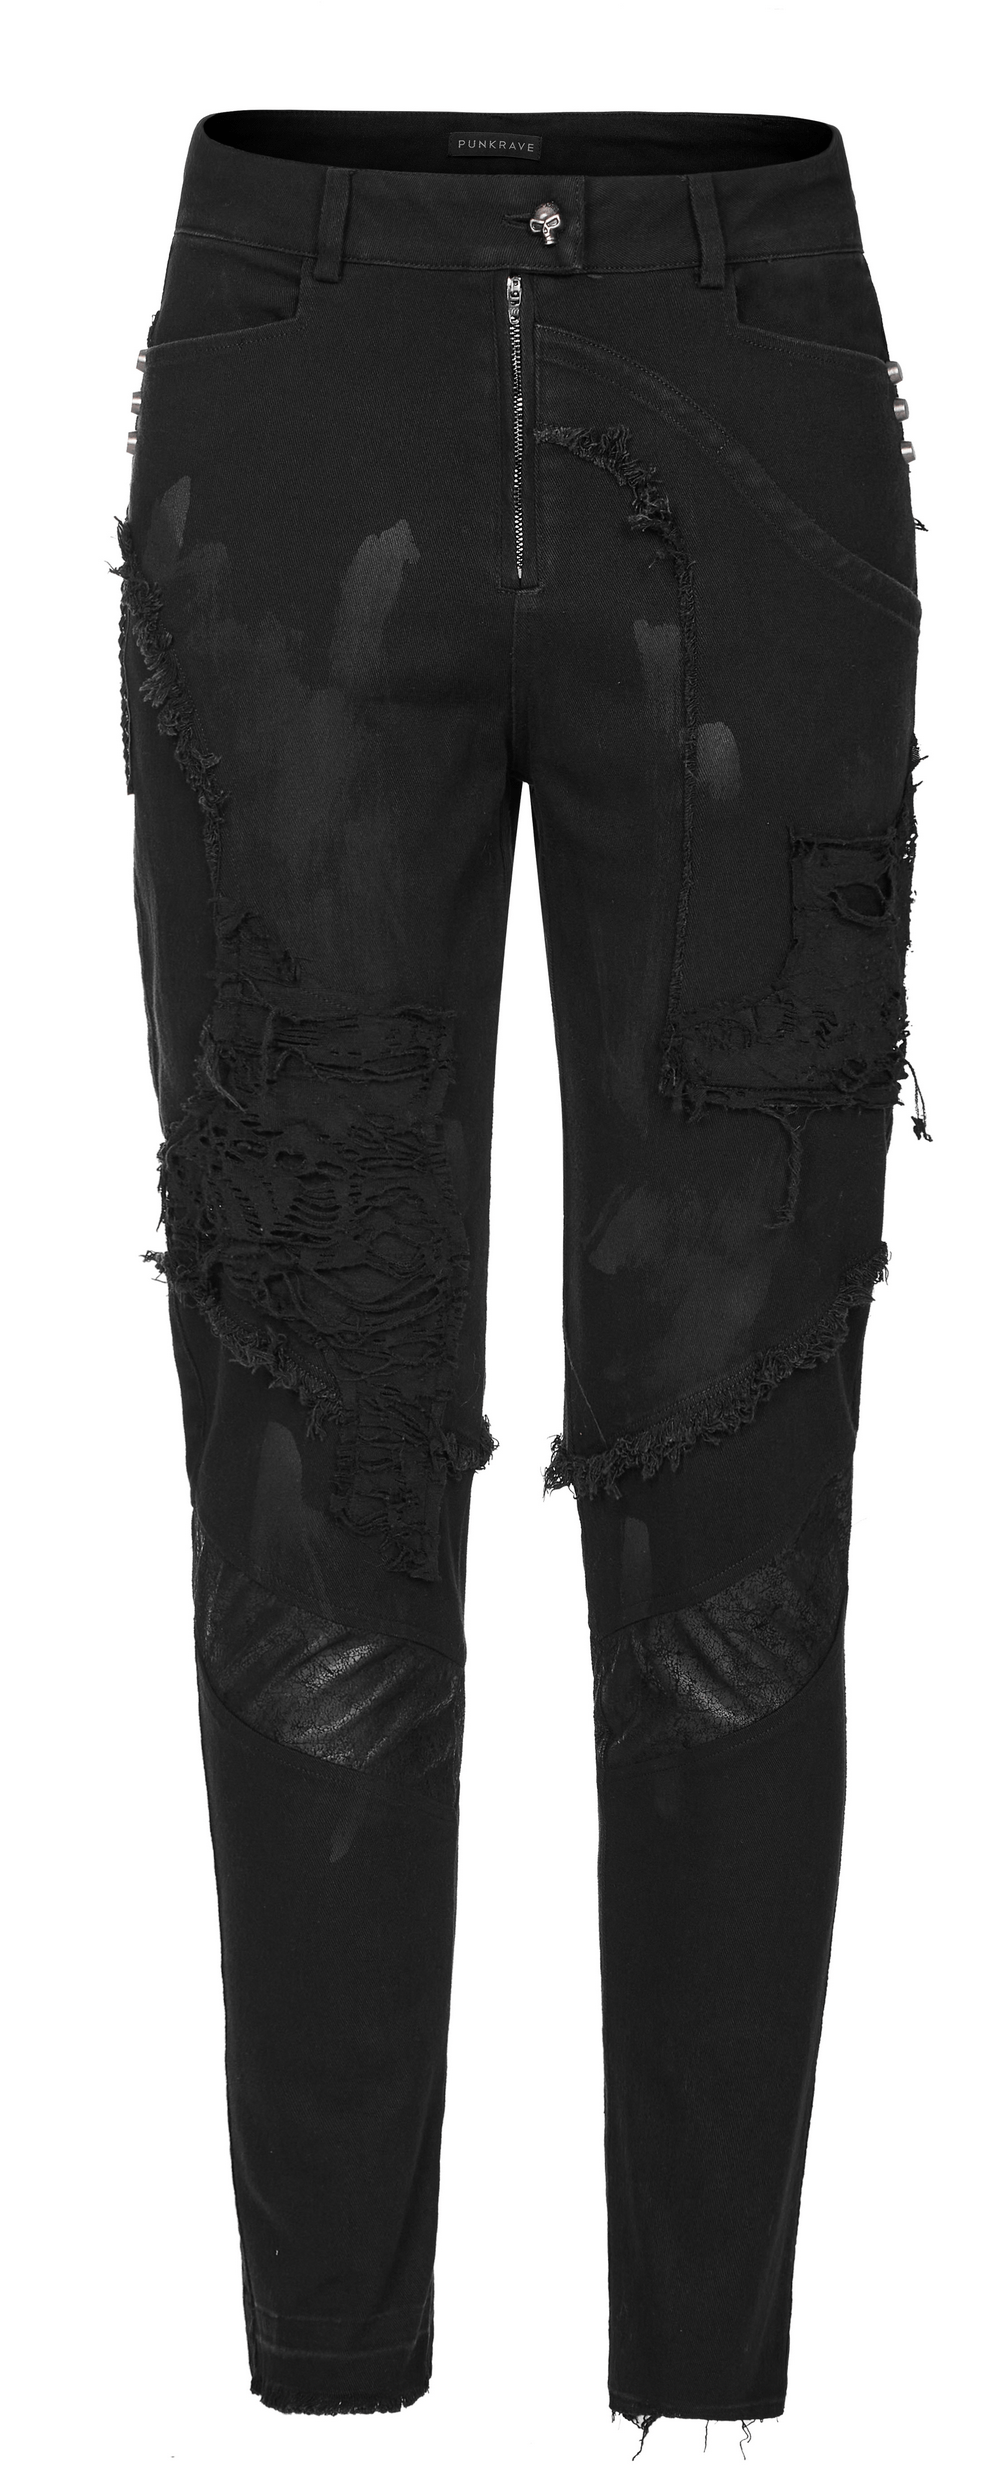 Edgy Distressed Black Denim Gothic Pants - HARD'N'HEAVY